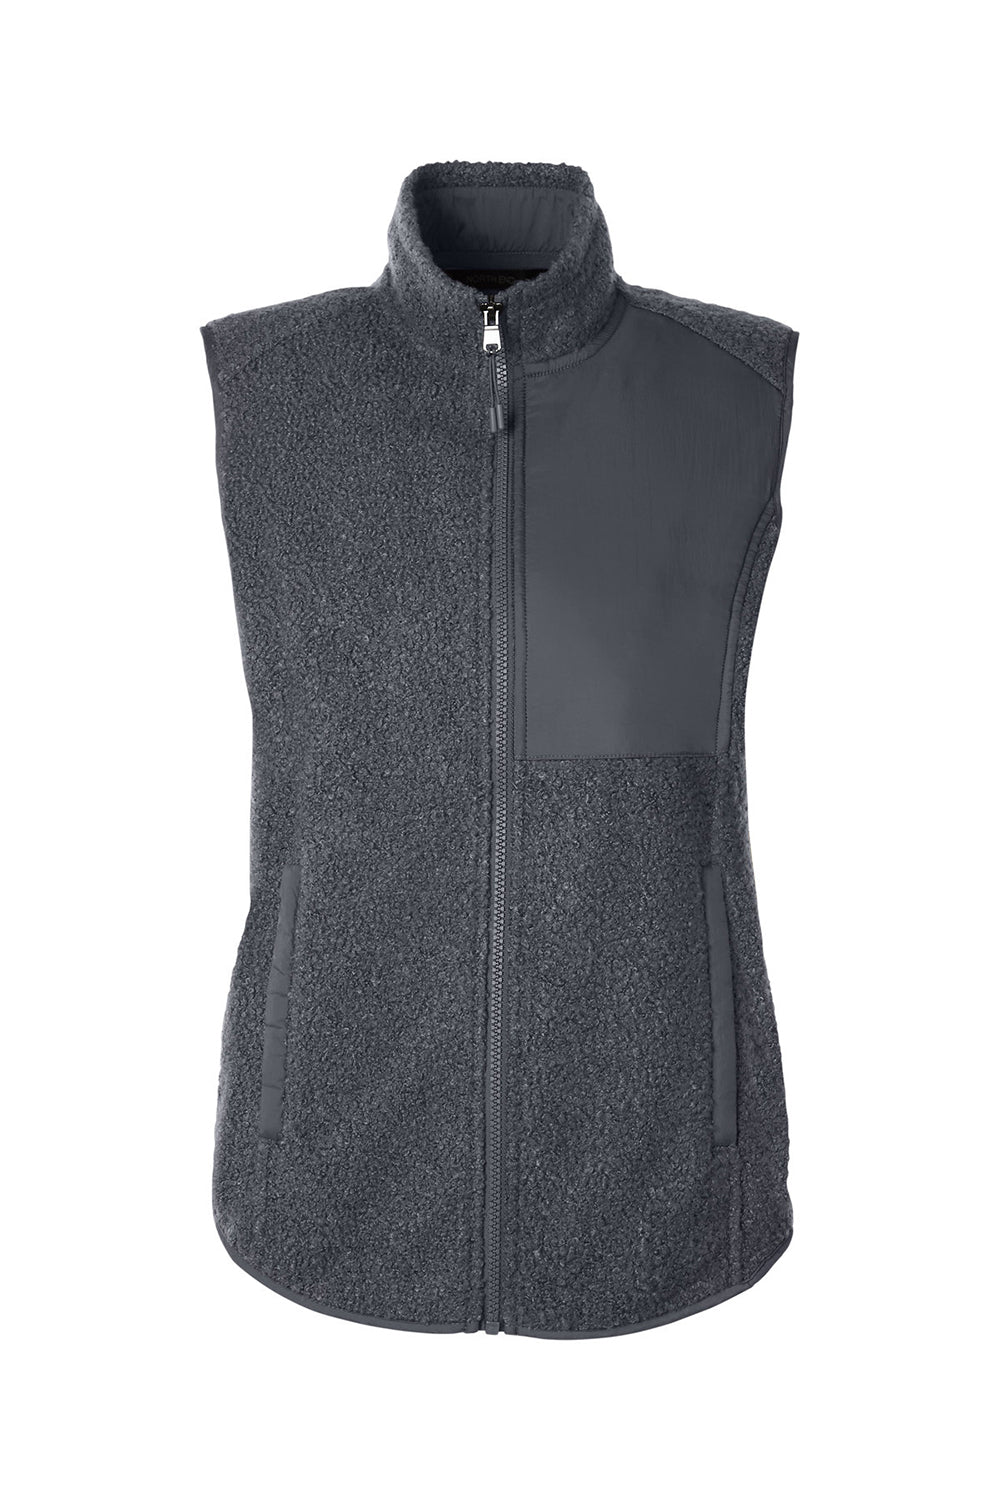 North End NE714W Womens Aura Sweater Fleece Full Zip Vest Carbon Grey Flat Front